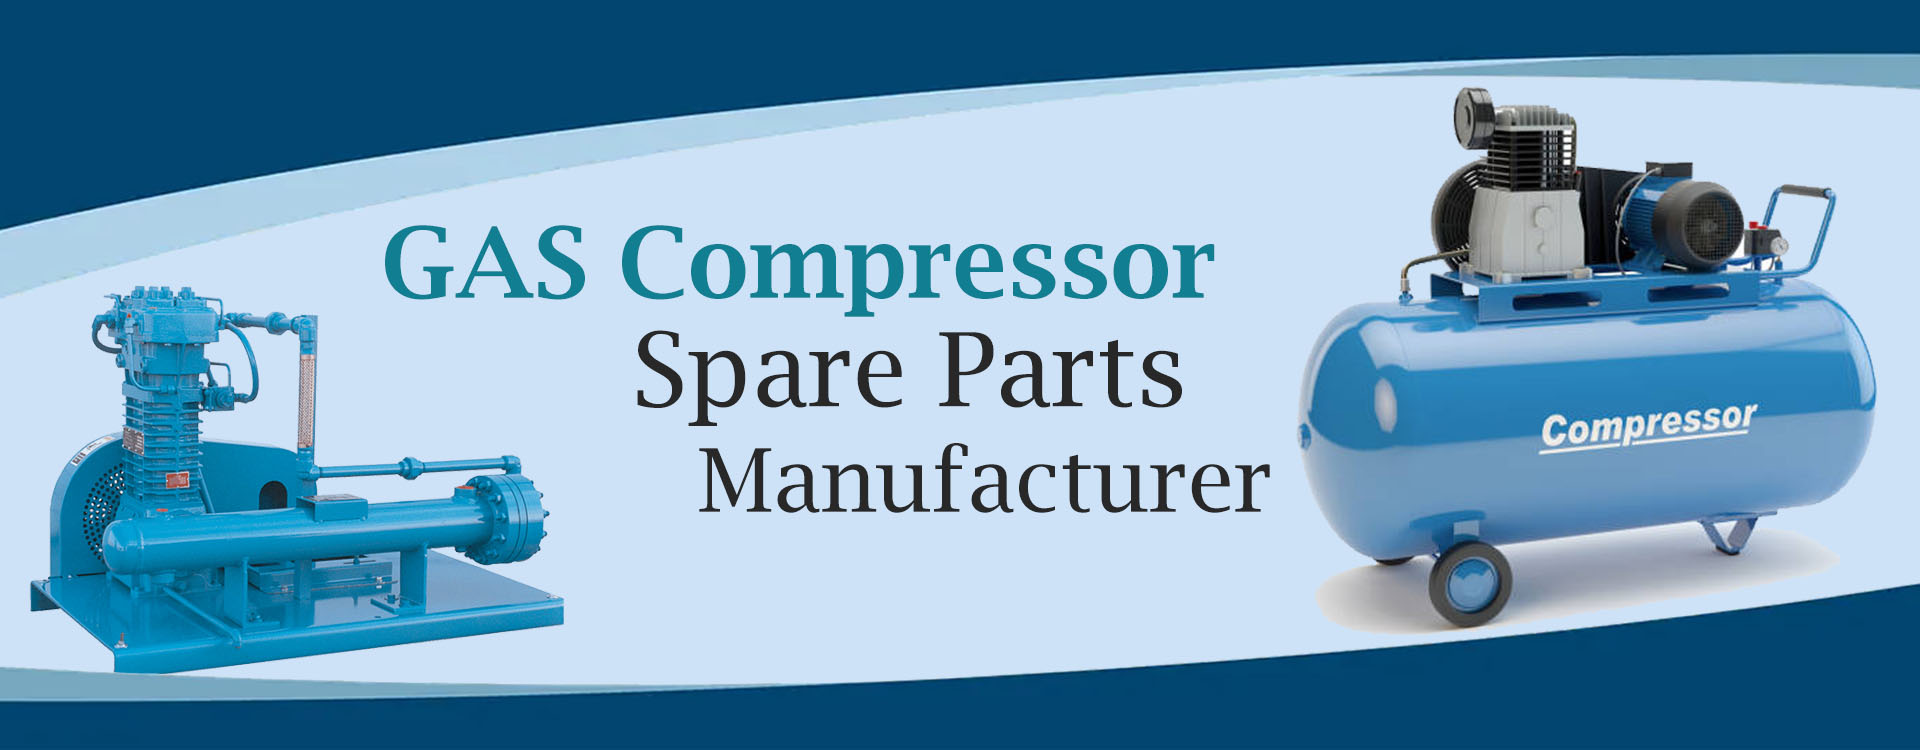 GAS Compressor Spare Part Manufacturer In india